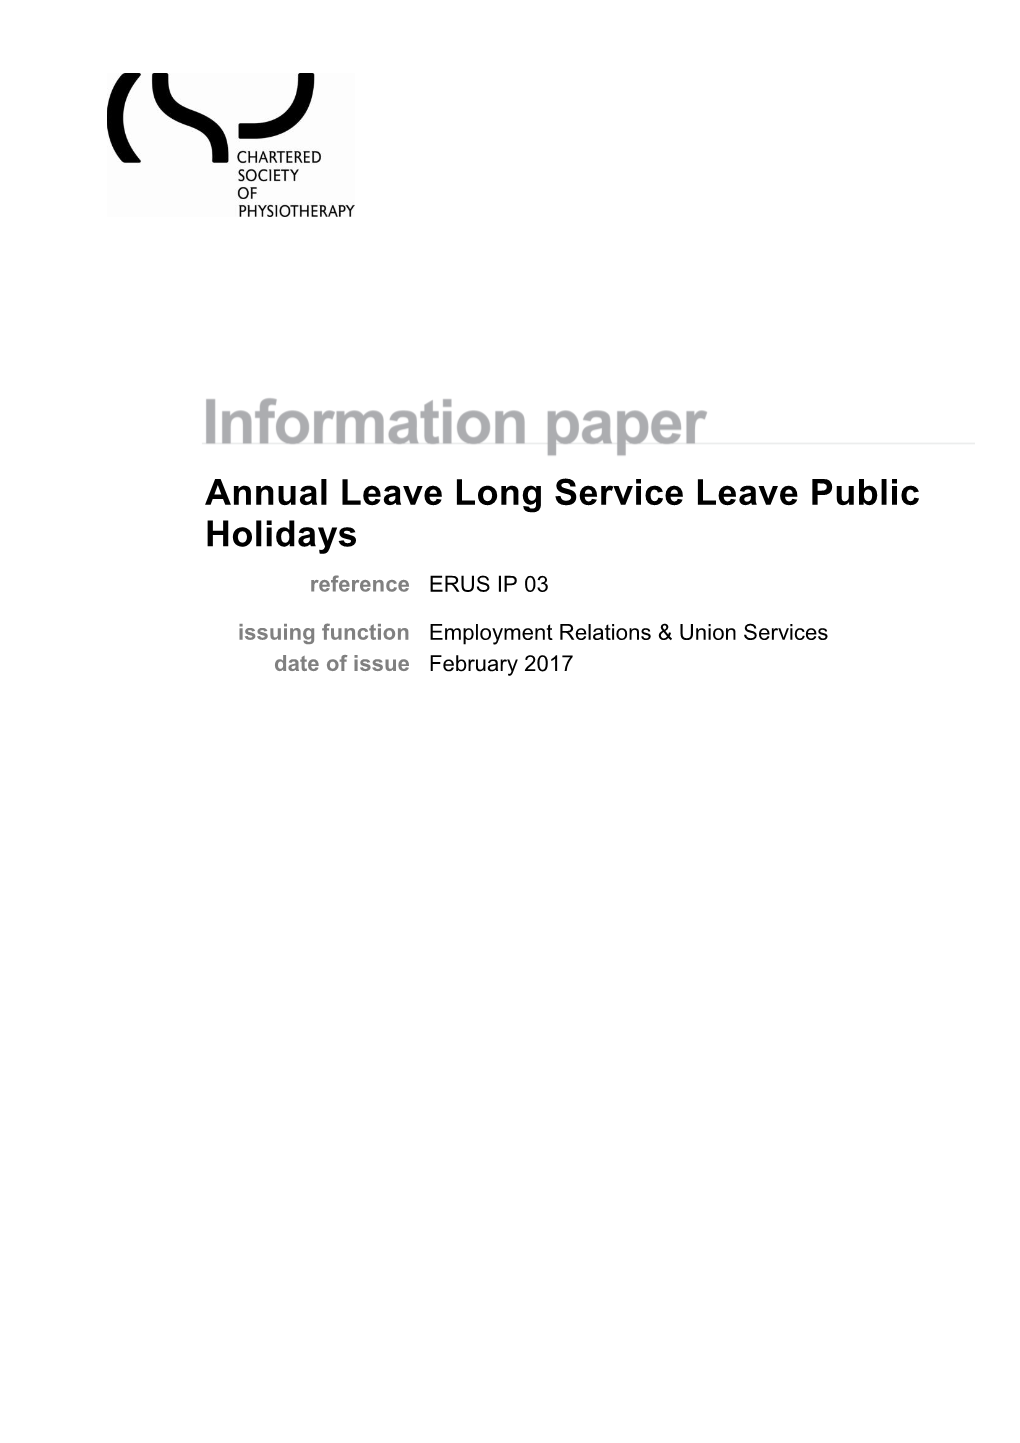 Annual Leave Long Service Leave Public Holidays 2017 - ERUS IP 03 - February 2017 1